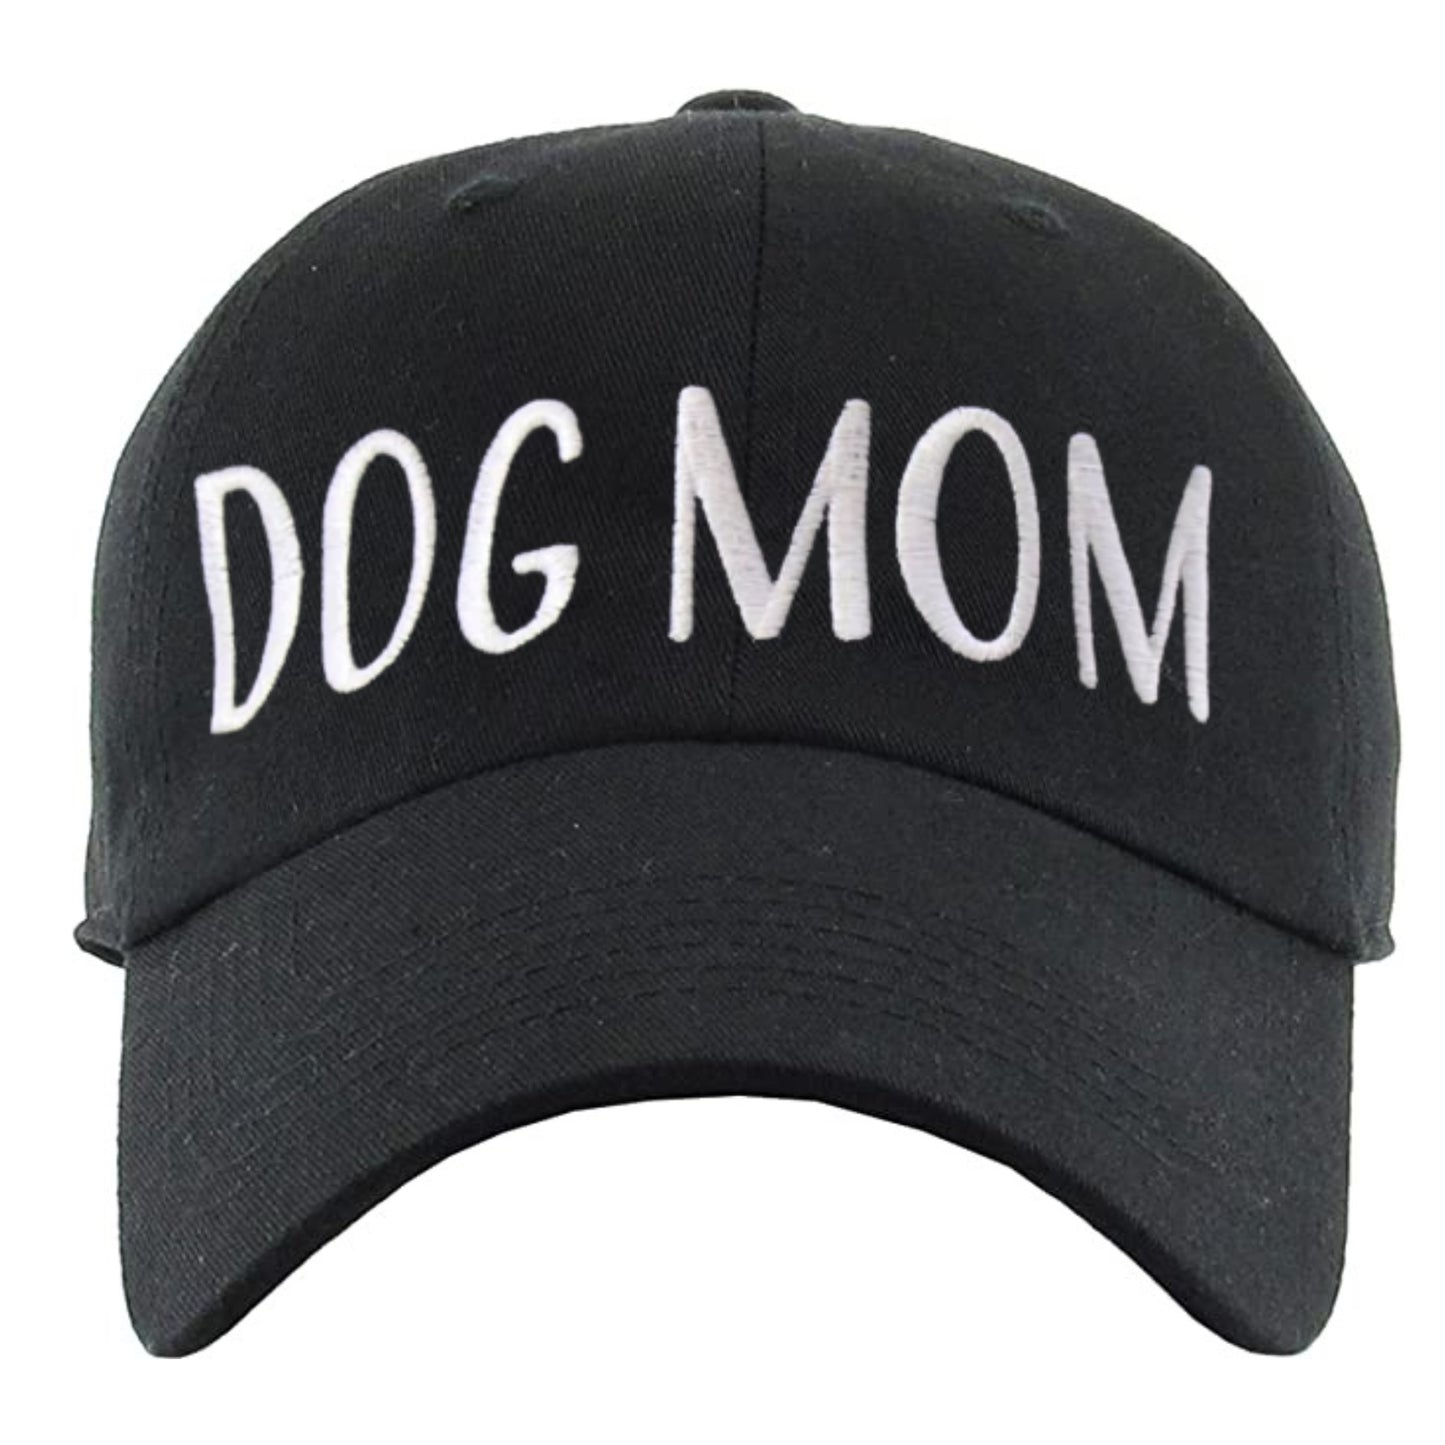 DOG MOM NON DISTRESSED BLACK HAT- BY DAPPER DEXTER